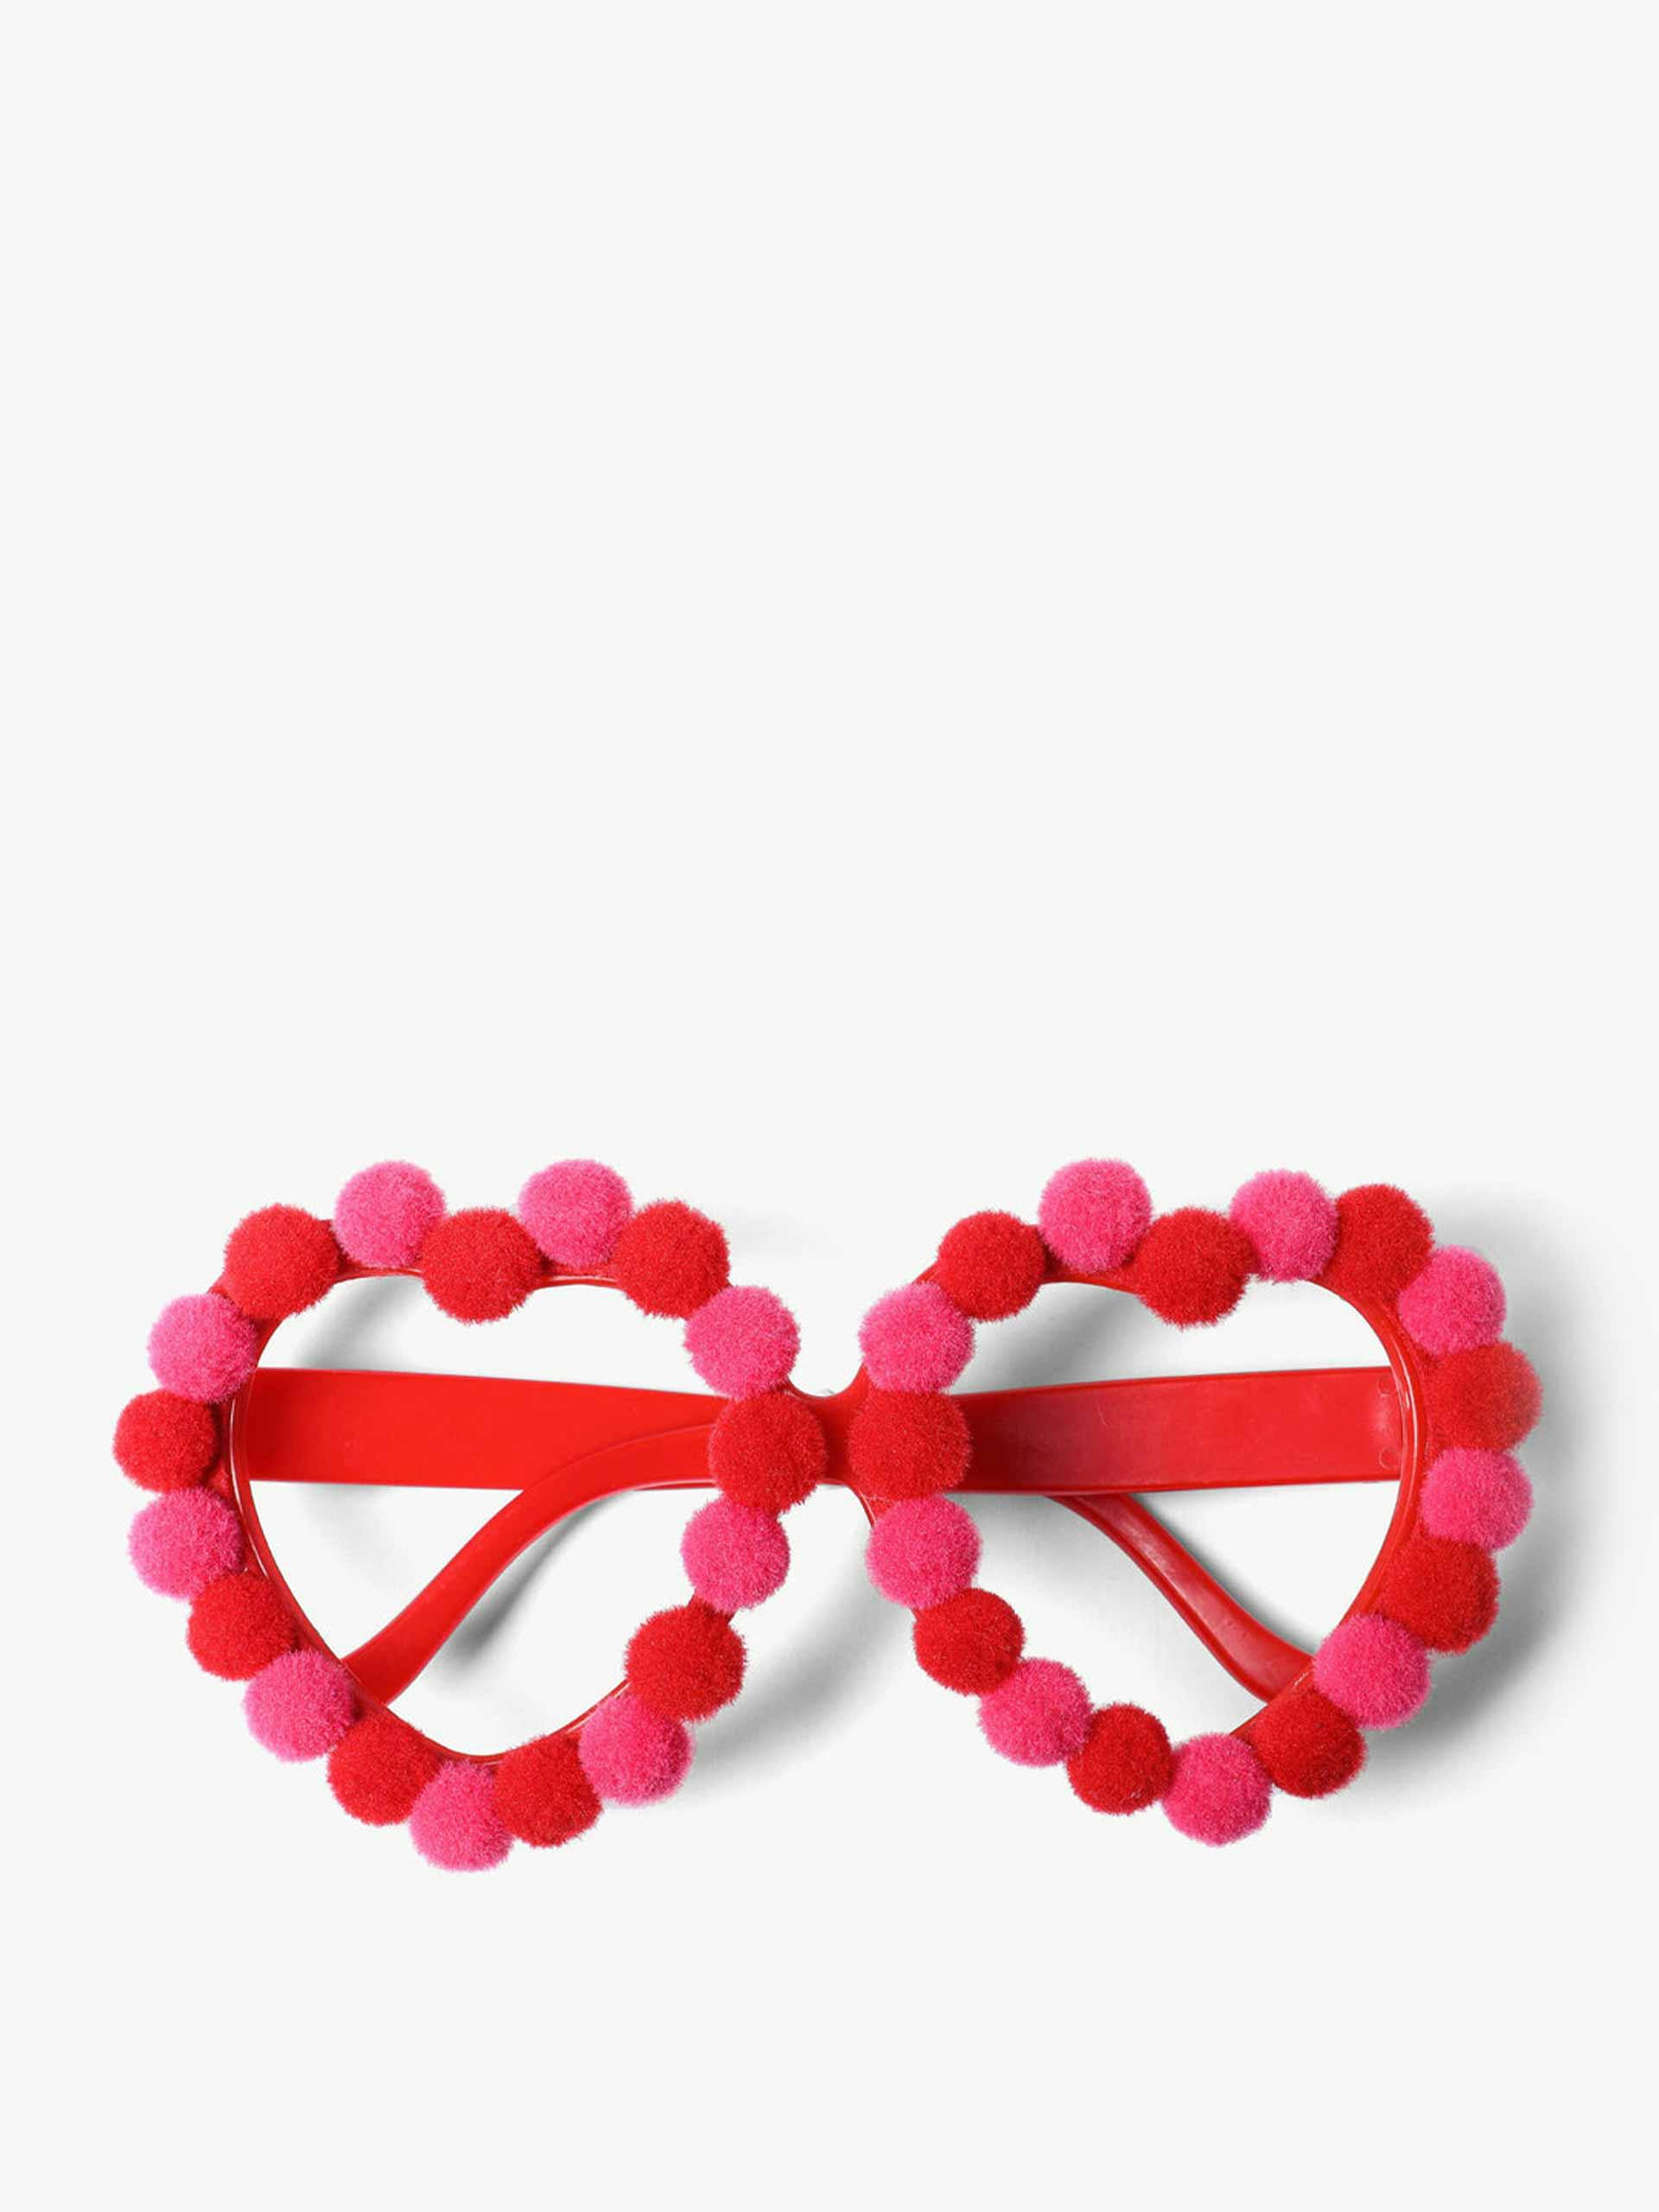 Heart shaped pom pom glasses